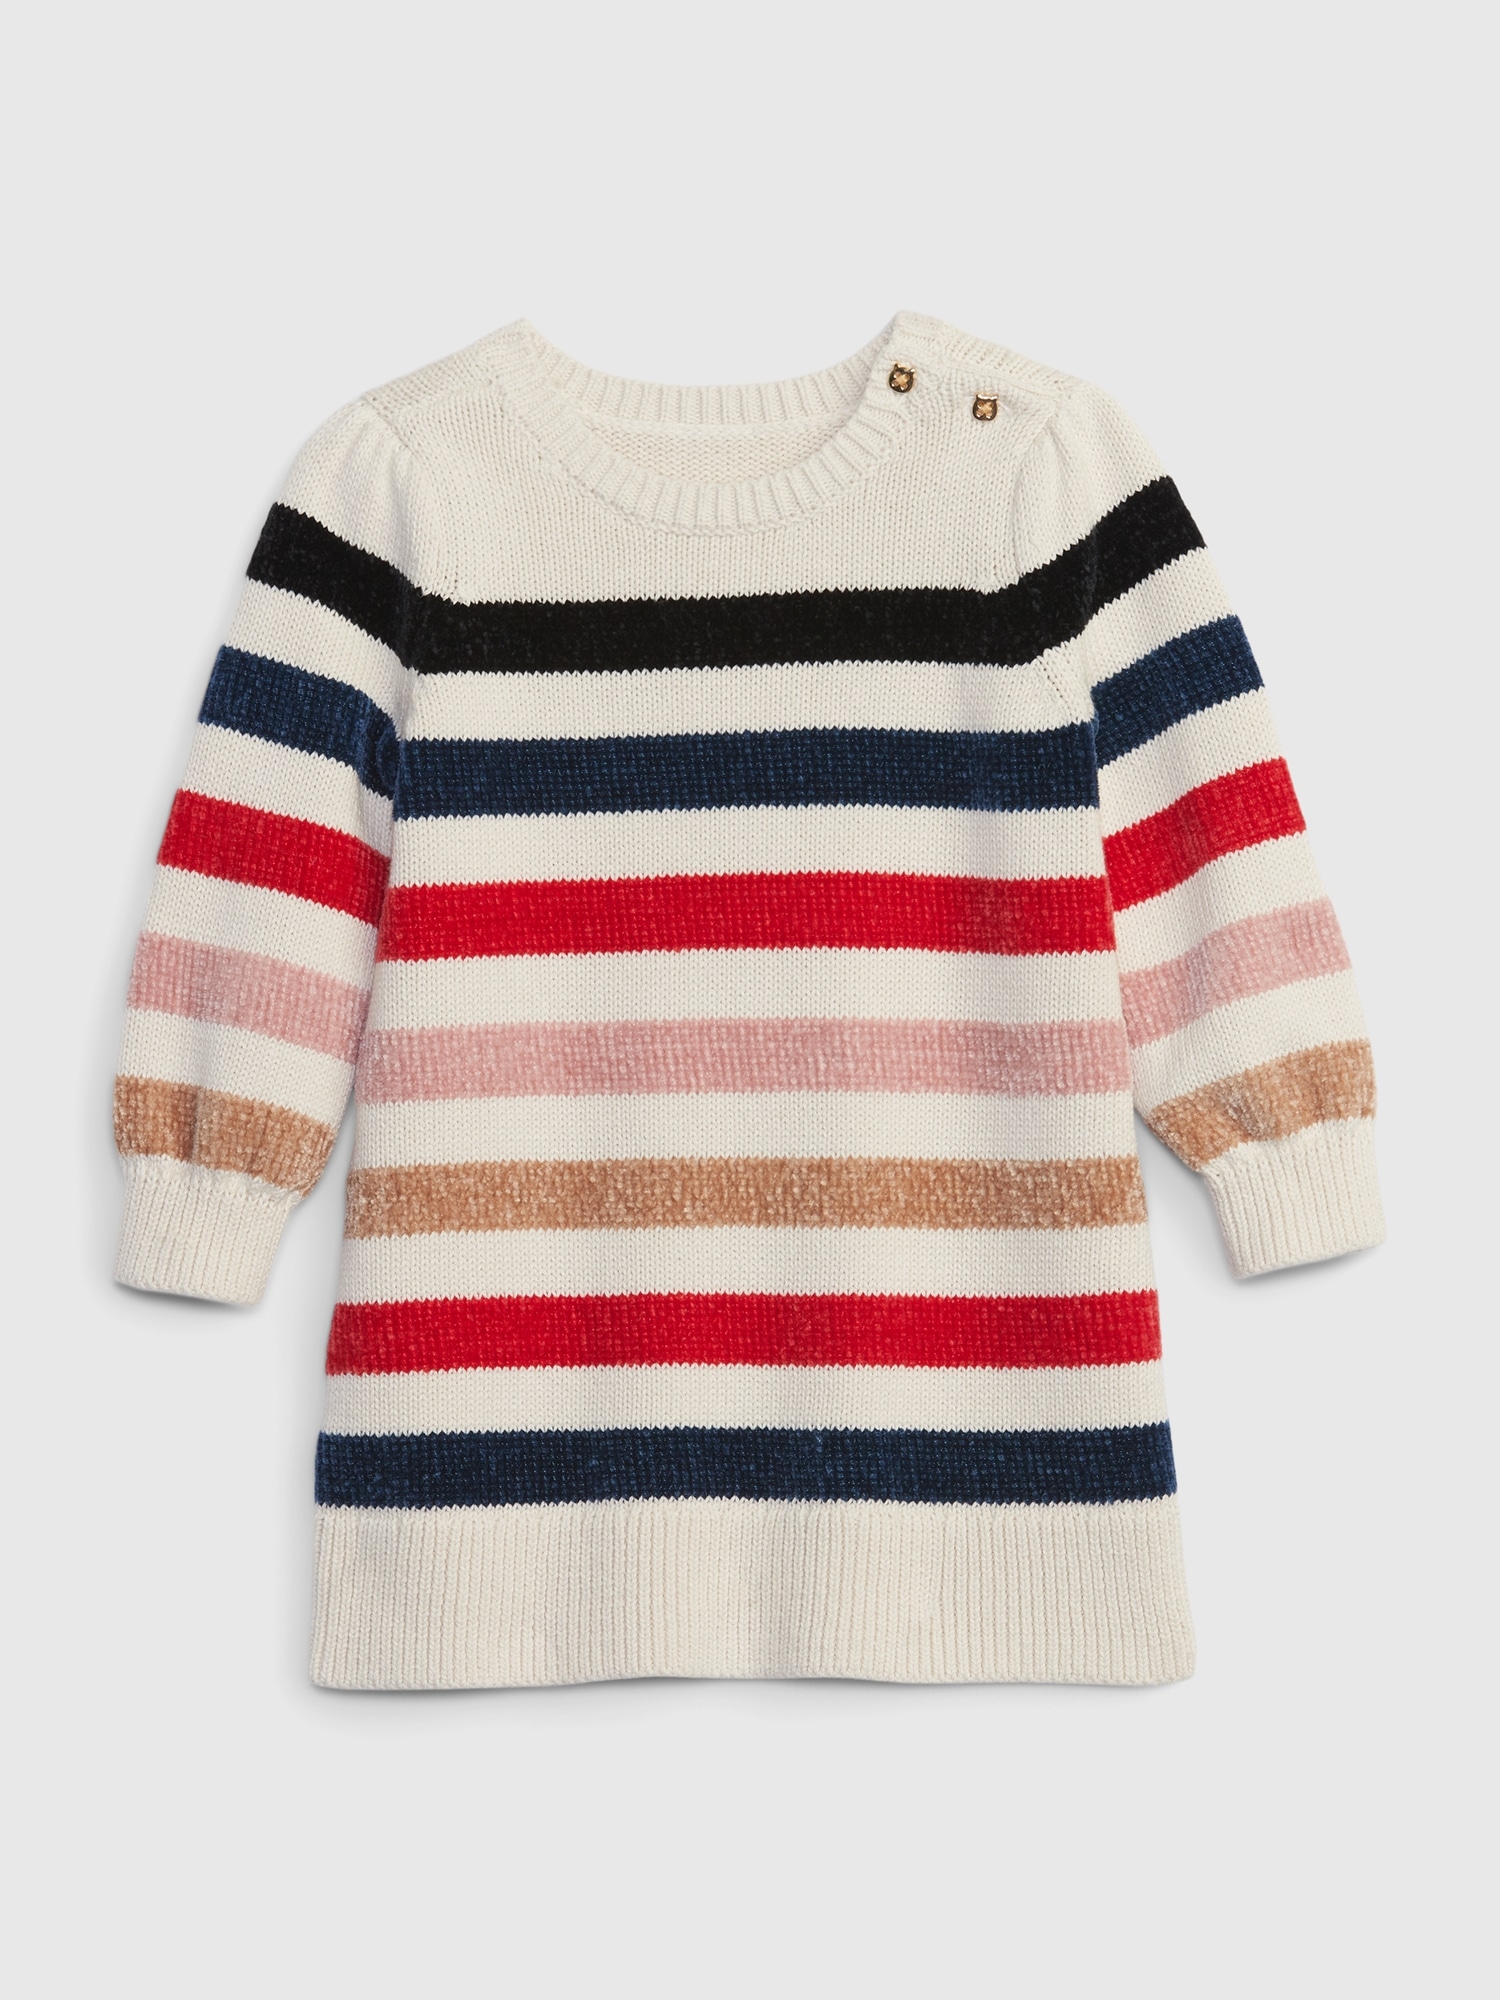 Baby Stripe Sweater Dress | Gap